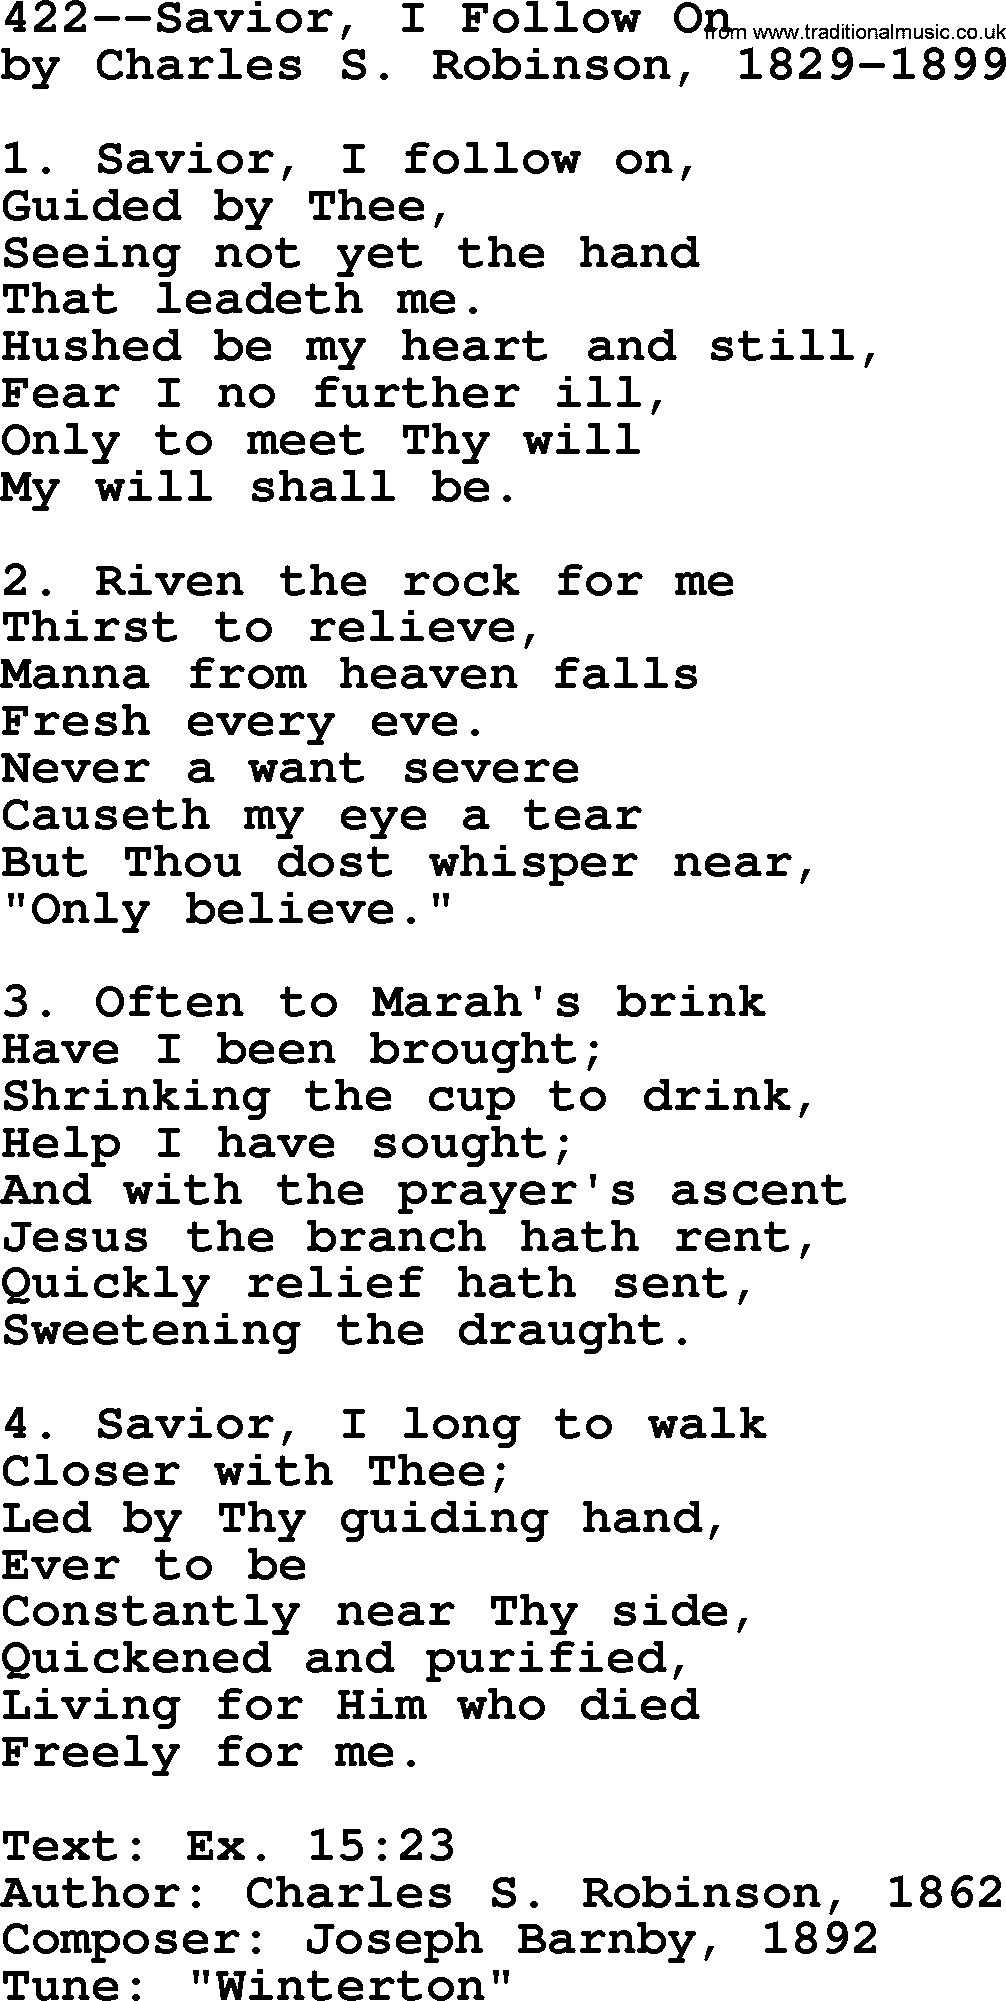 Lutheran Hymn: 422--Savior, I Follow On.txt lyrics with PDF